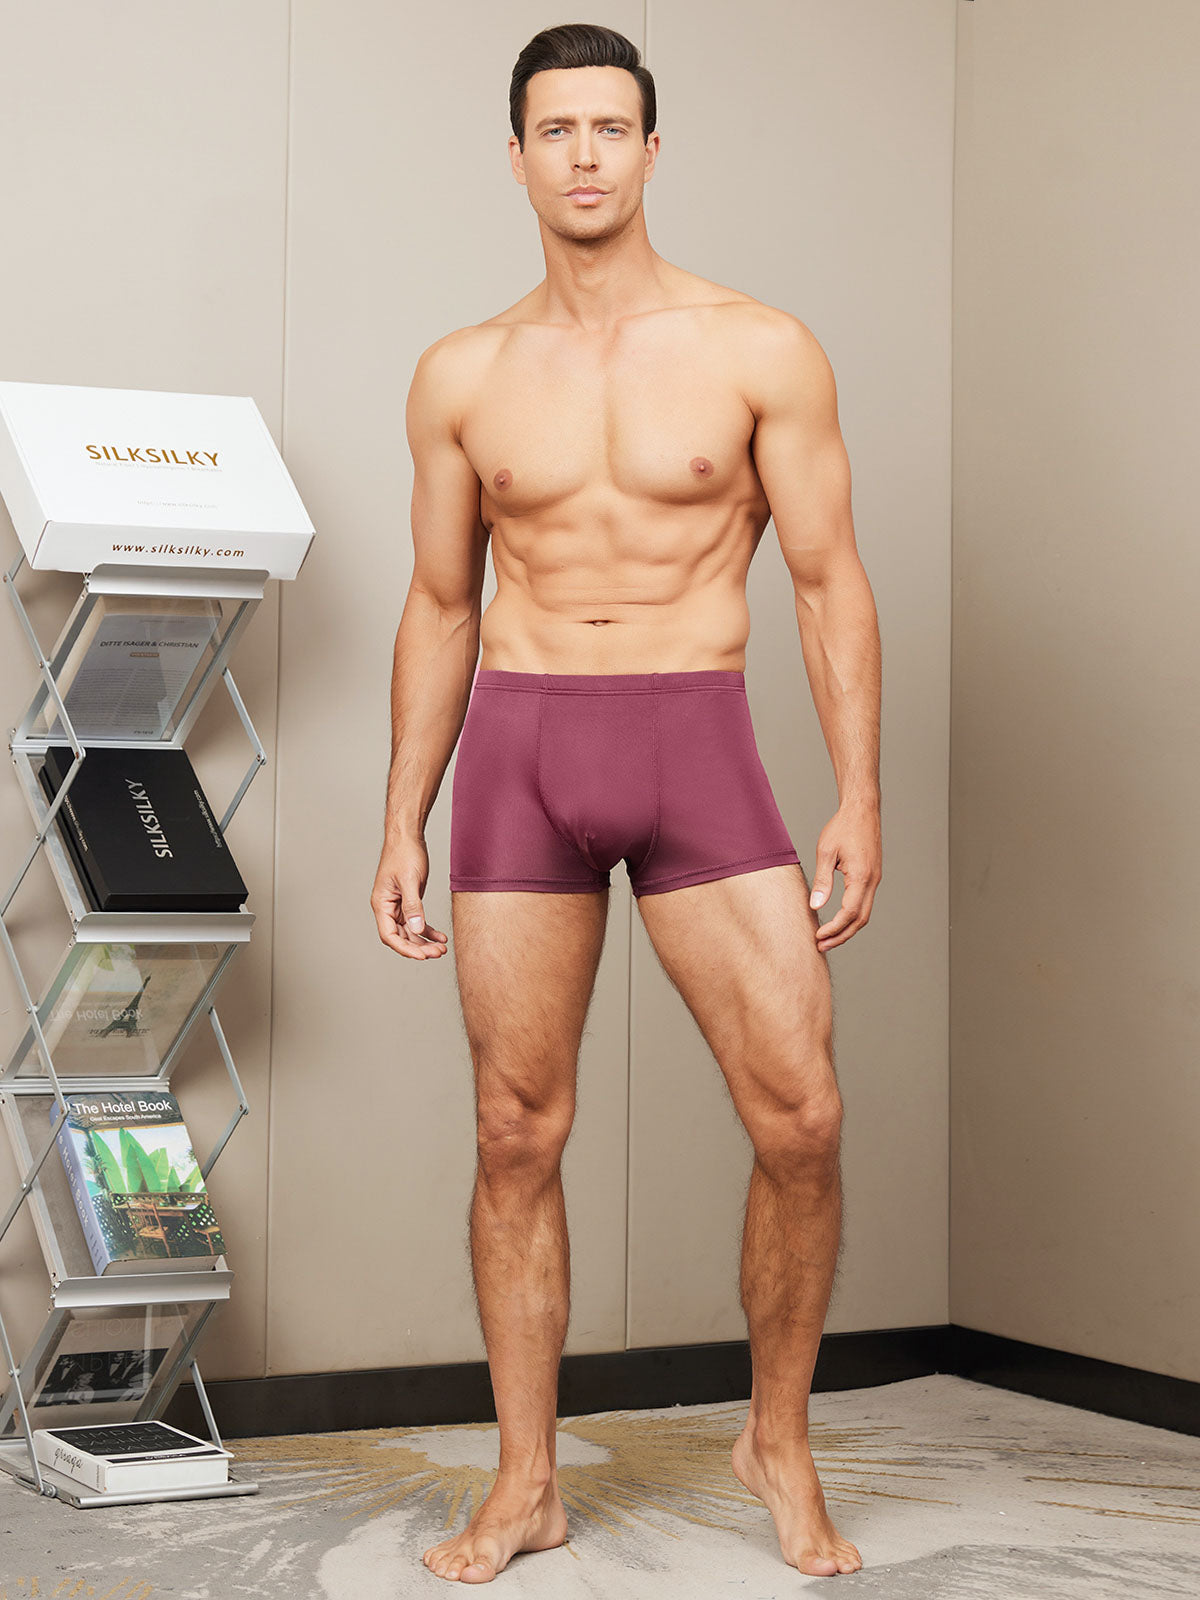 Men's Mulberry Silk Boxer Shorts